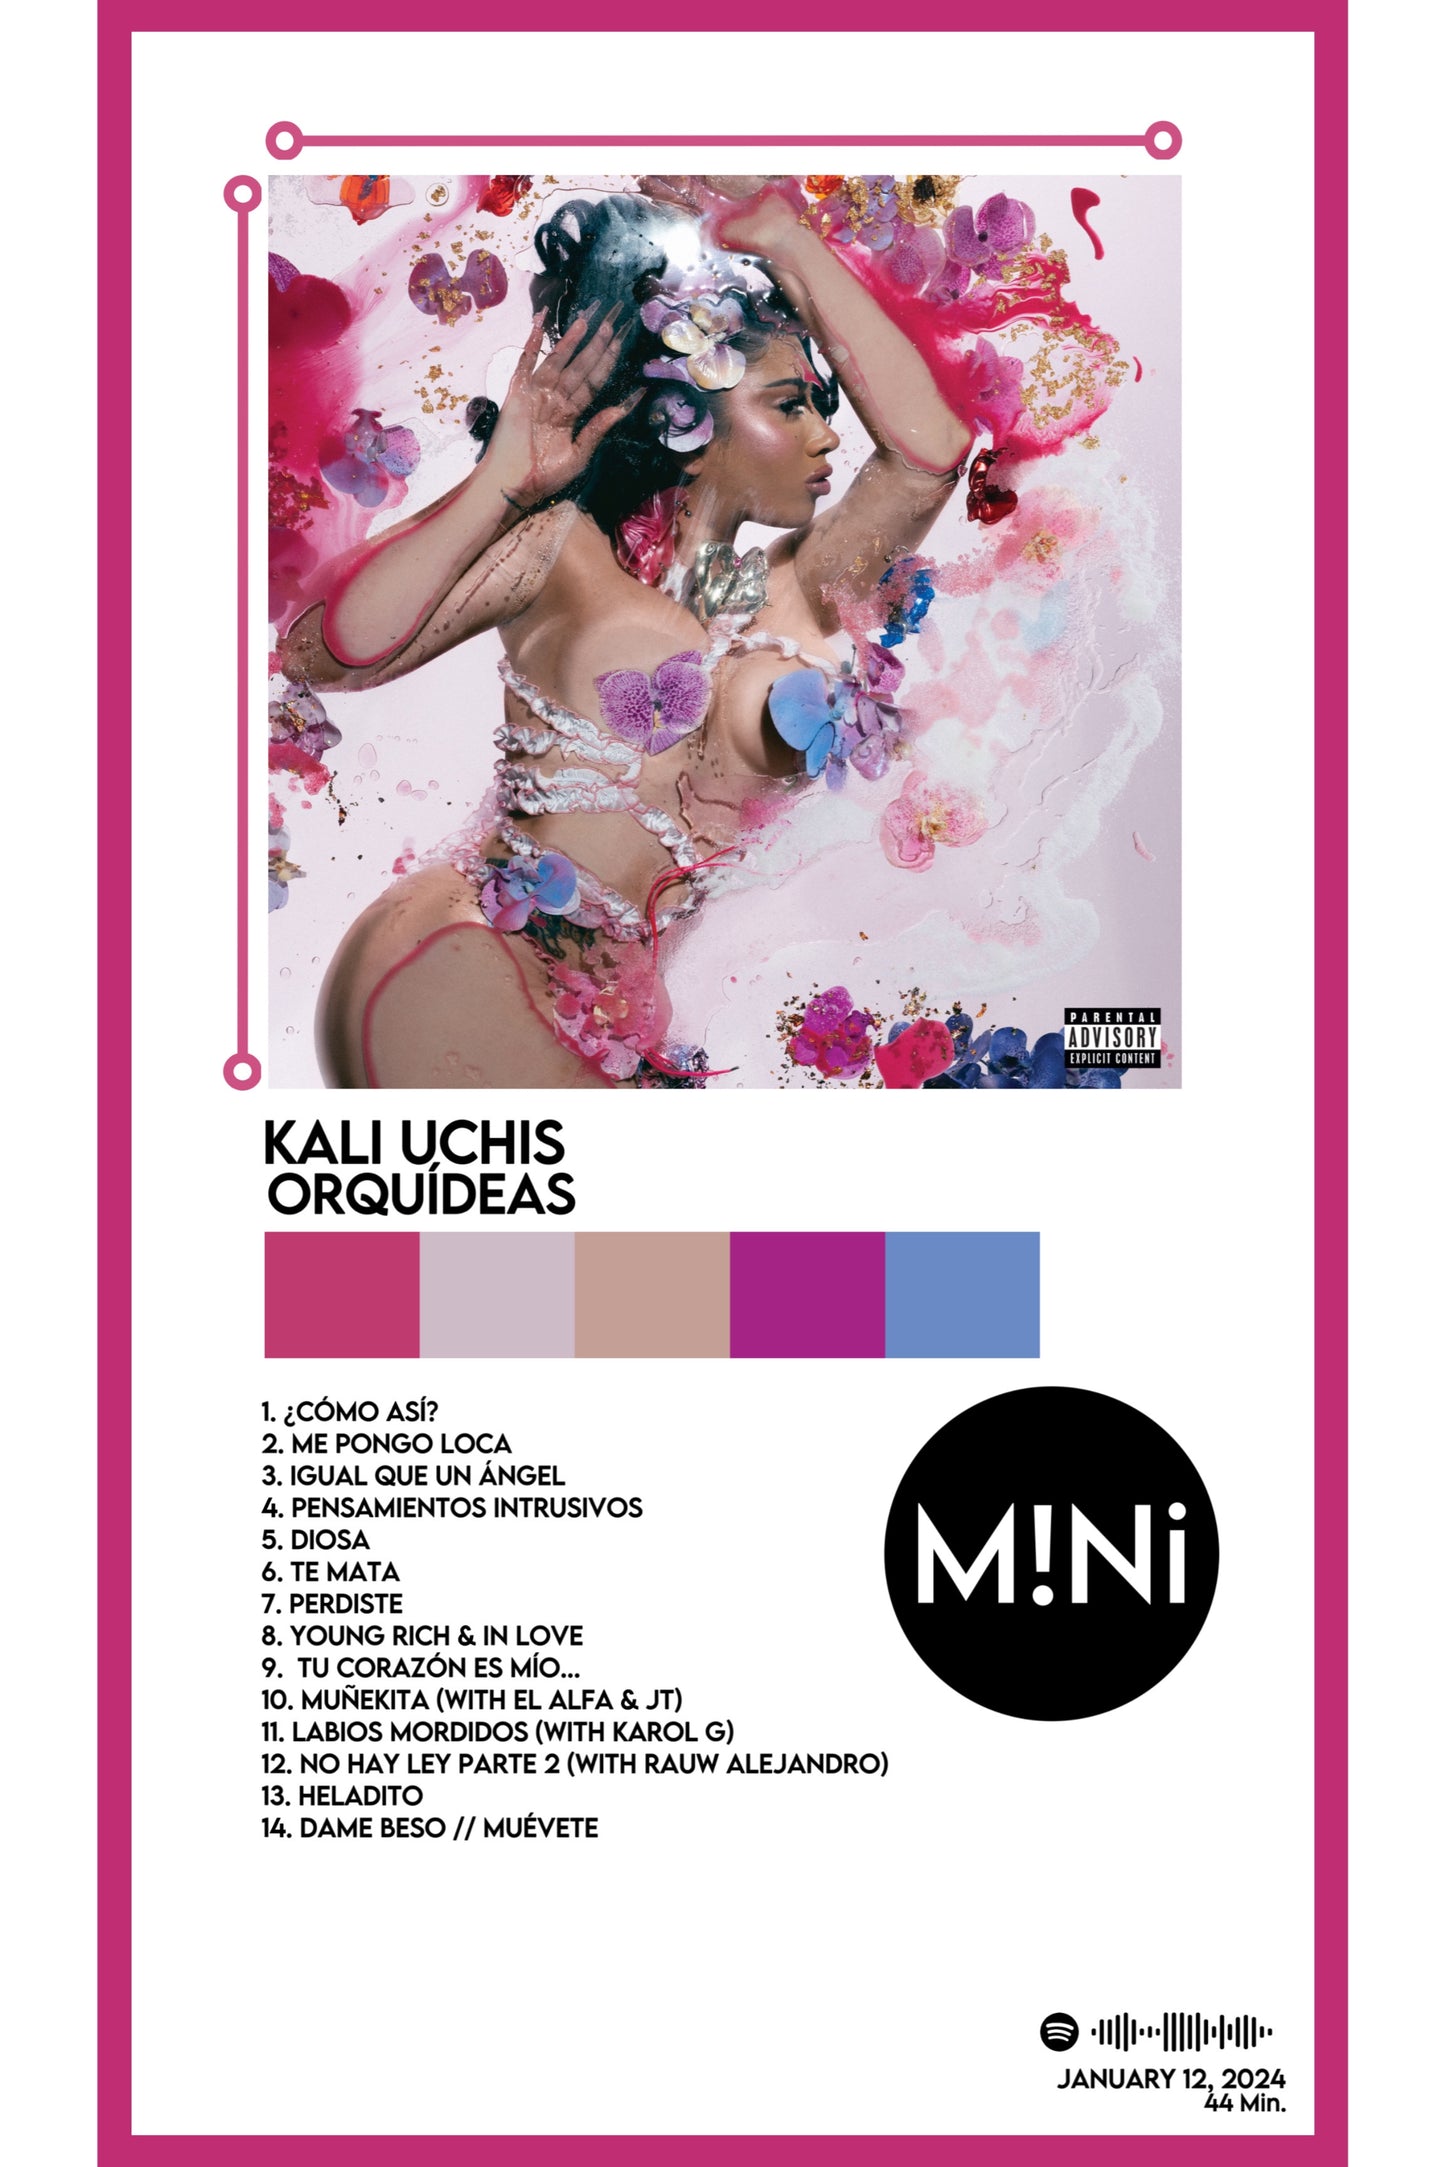 Kali Uchis - 'Orquídeas' 12x18 Poster